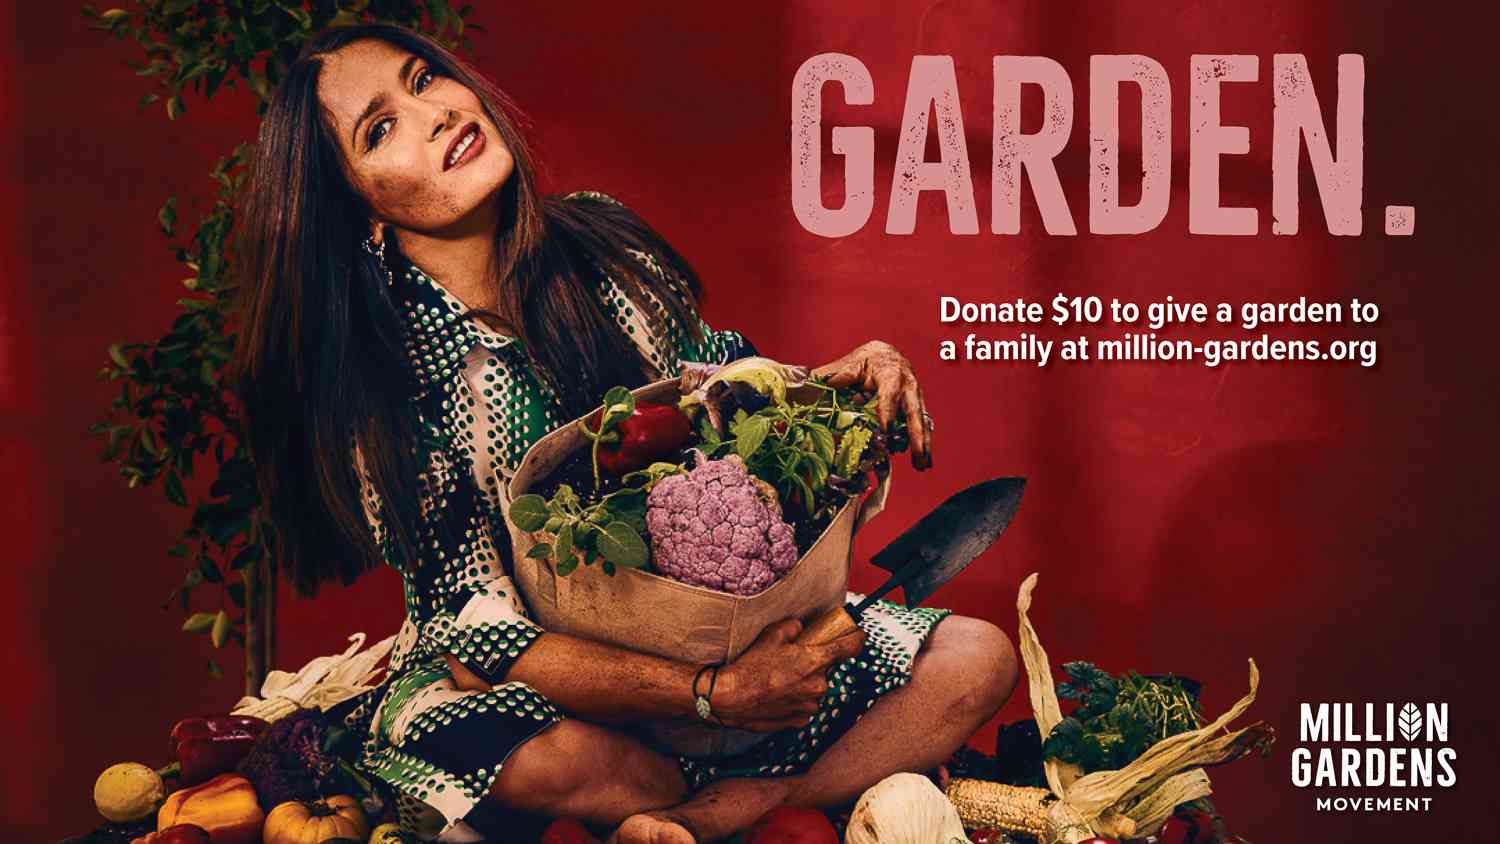 Warwick Saint renowned advertising photographer led worldwide Million Garden Movement campaigns.